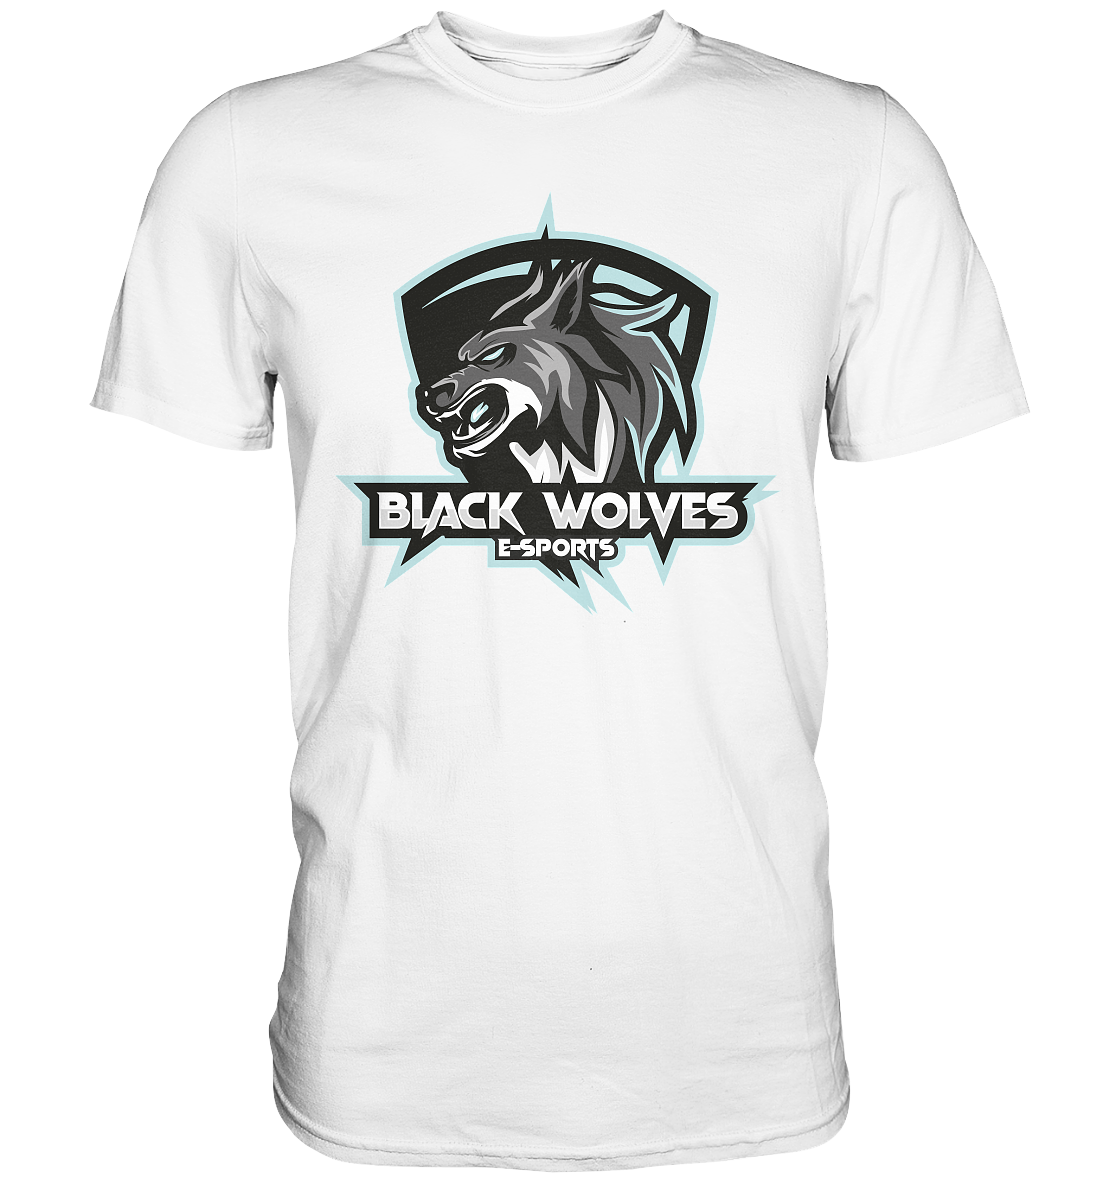 BLACK WOLVES E-SPORTS - Basic Shirt